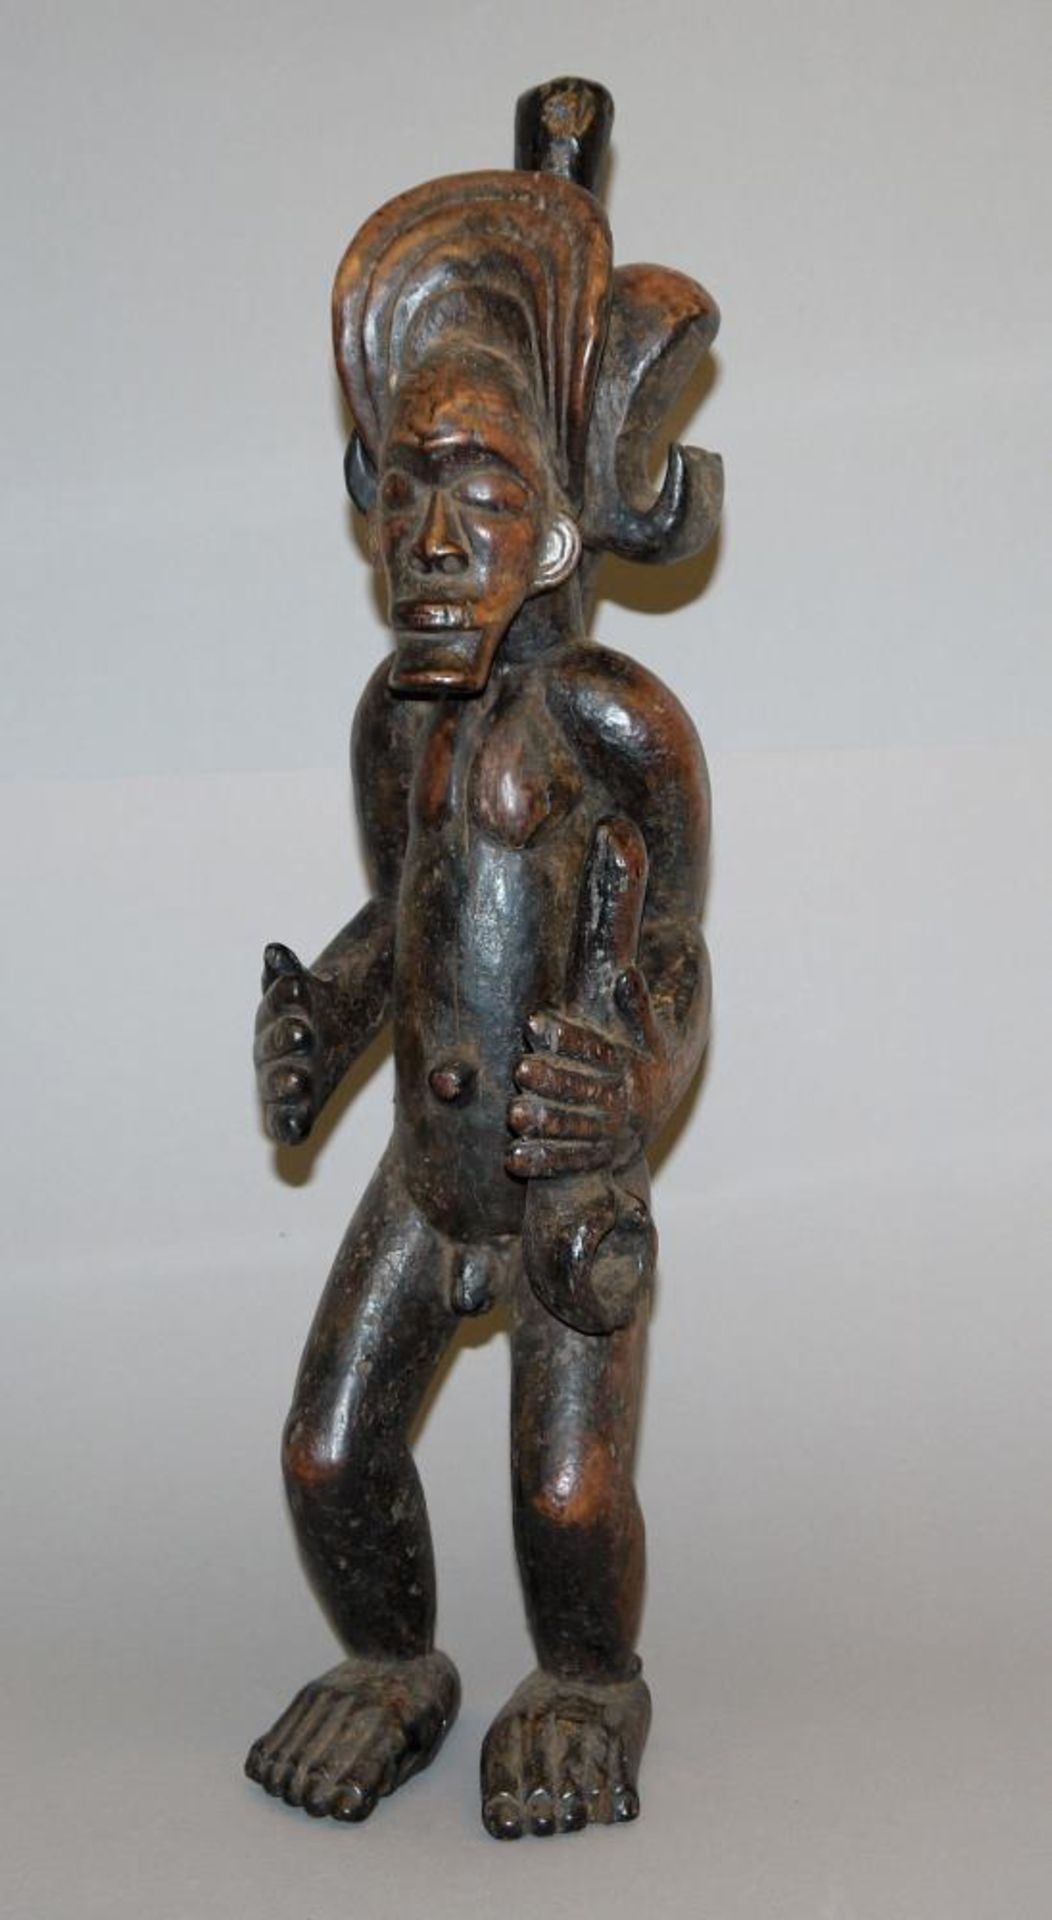 Häuptlingsfigur der Chokwe, Angola „Chibinda Ilunga“, der mythische Jäger, unbekleidet stehende